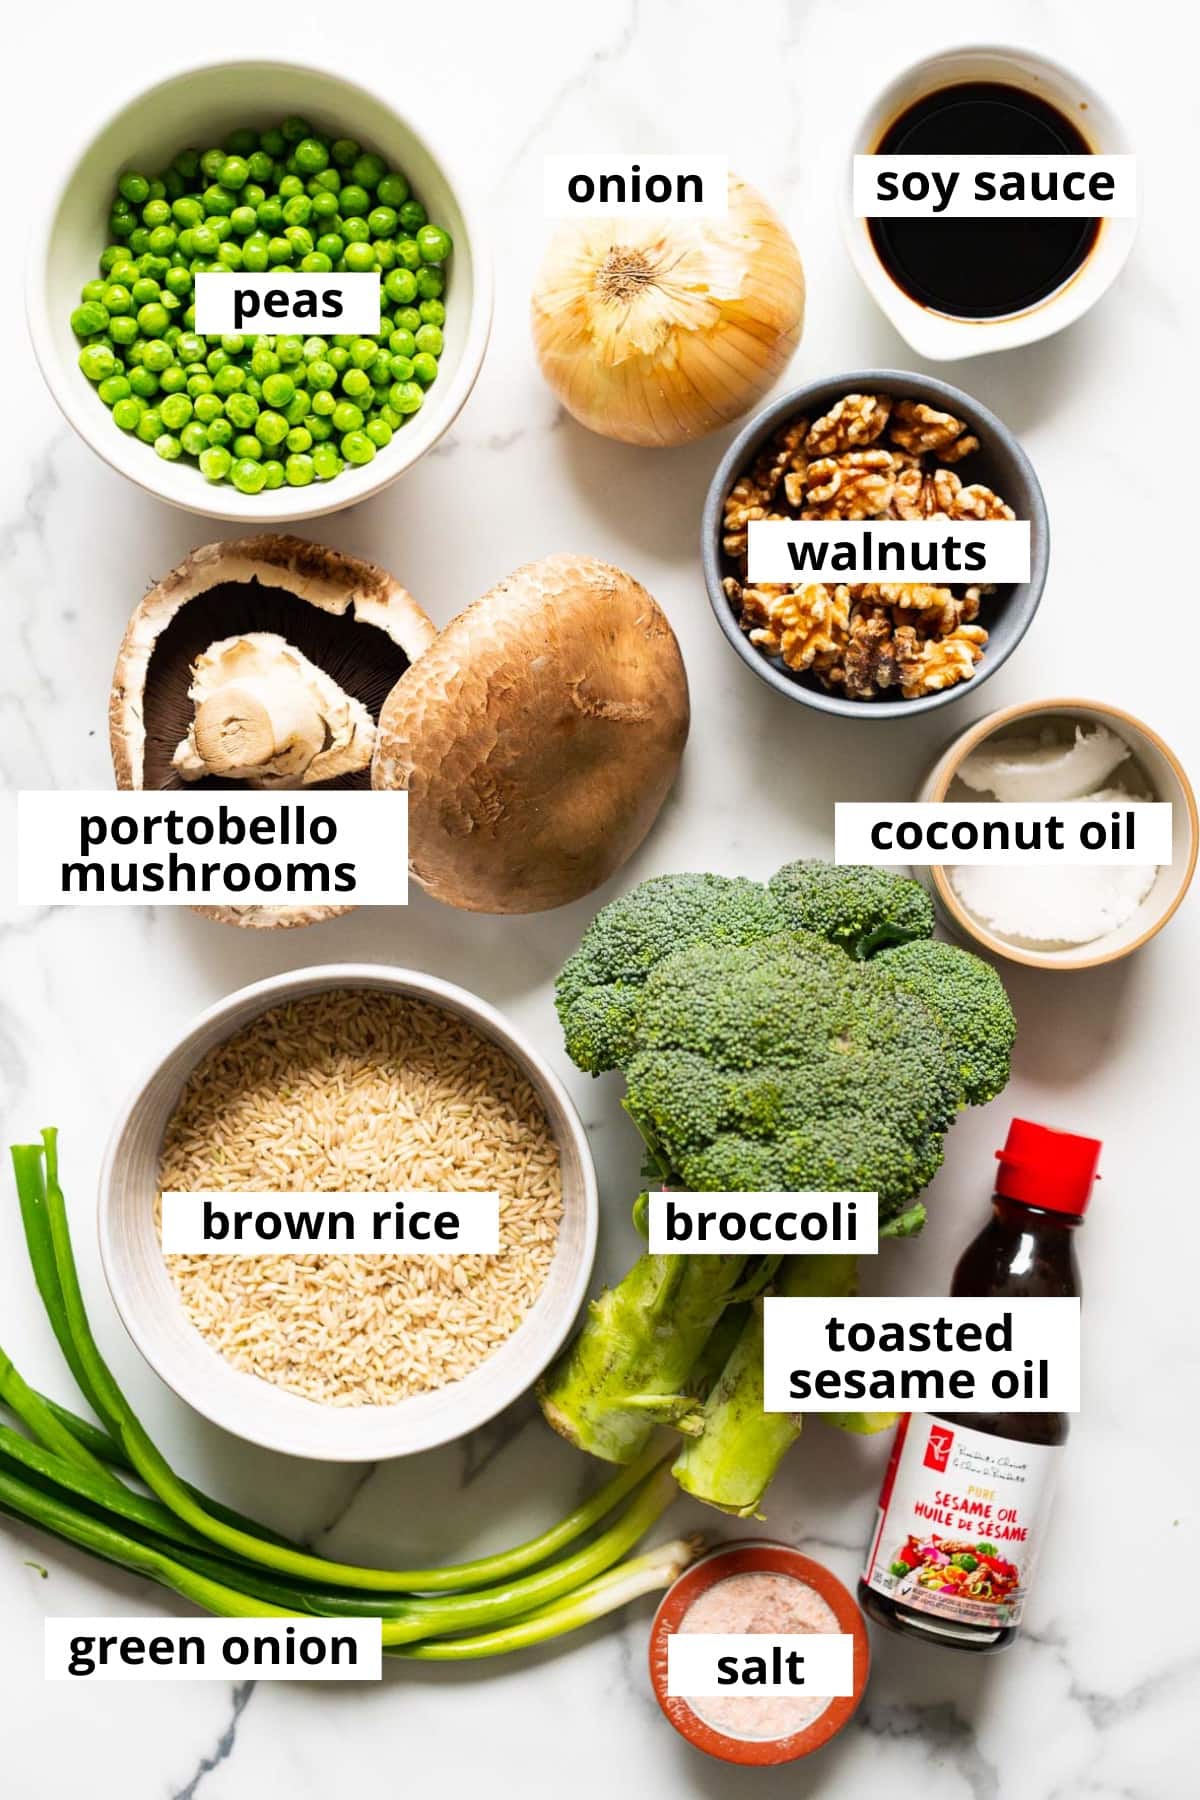 Peas, onion, soy sauce, walnuts, portobello mushrooms, coconut oil, broccoli, brown rice, toasted sesame oil, green onion, salt.